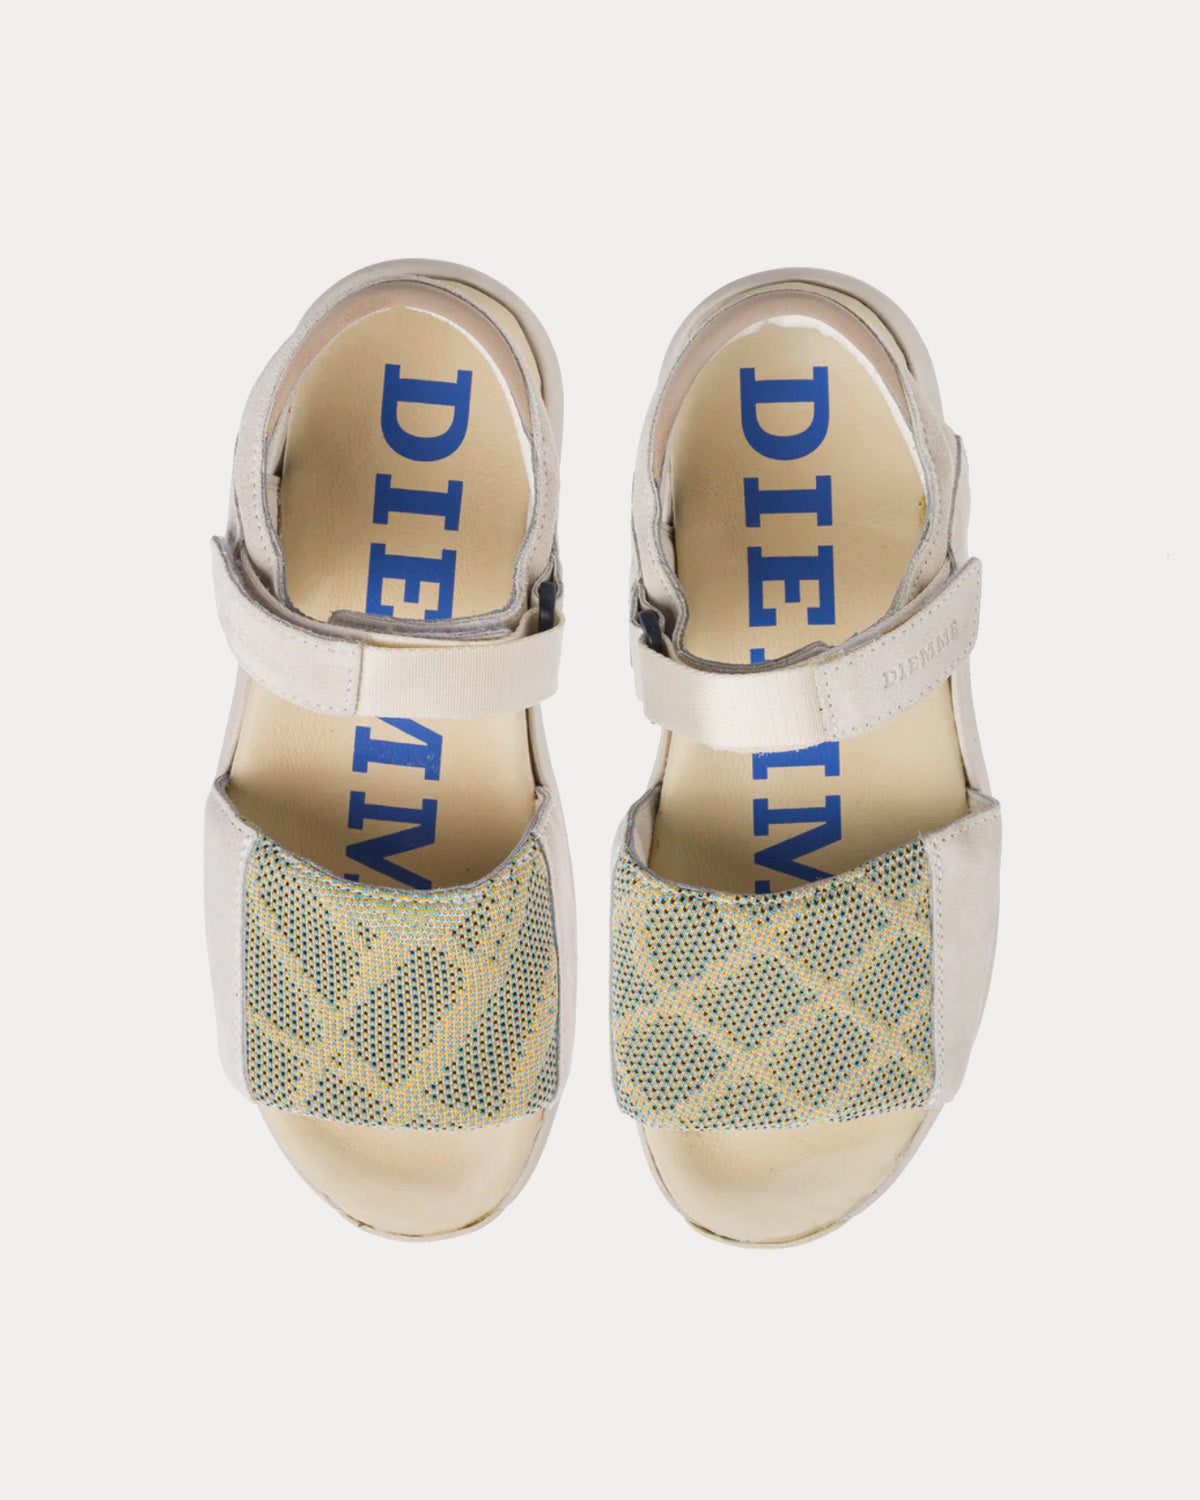 Diemme x Byborre - Dune Cloud Cream Sandals